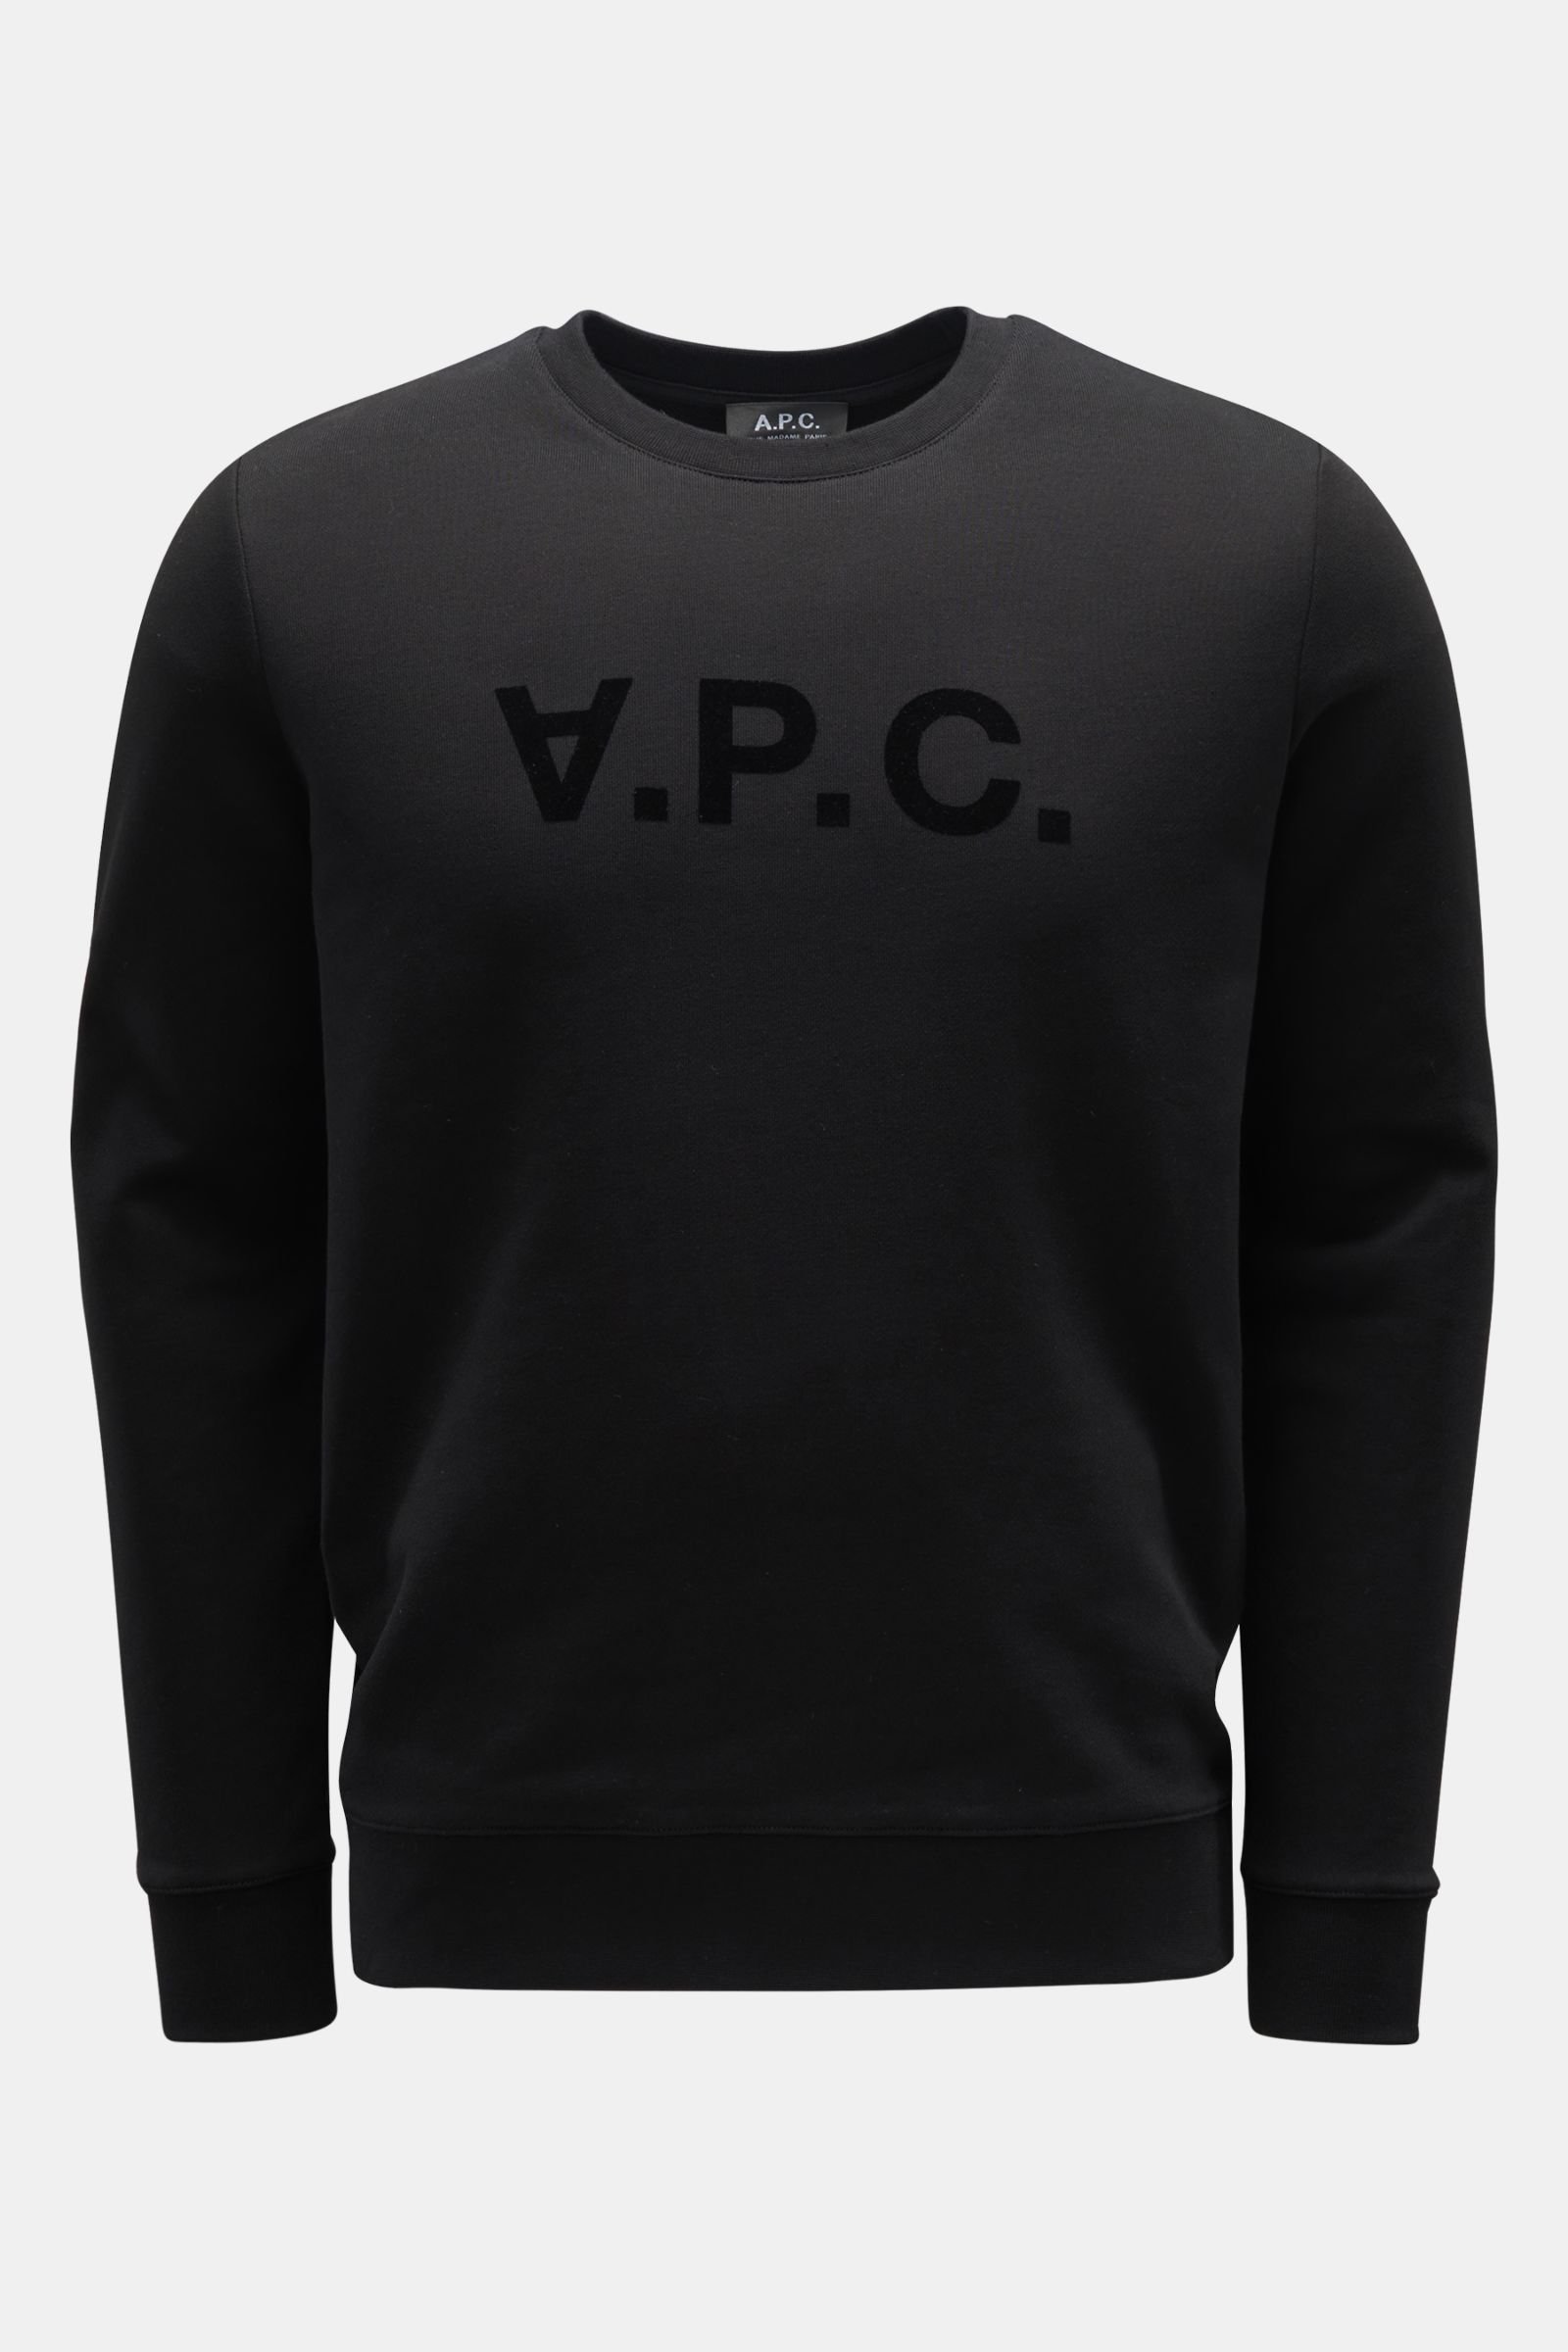 A.P.C. Crew neck sweatshirt 'VPC' black | BRAUN Hamburg